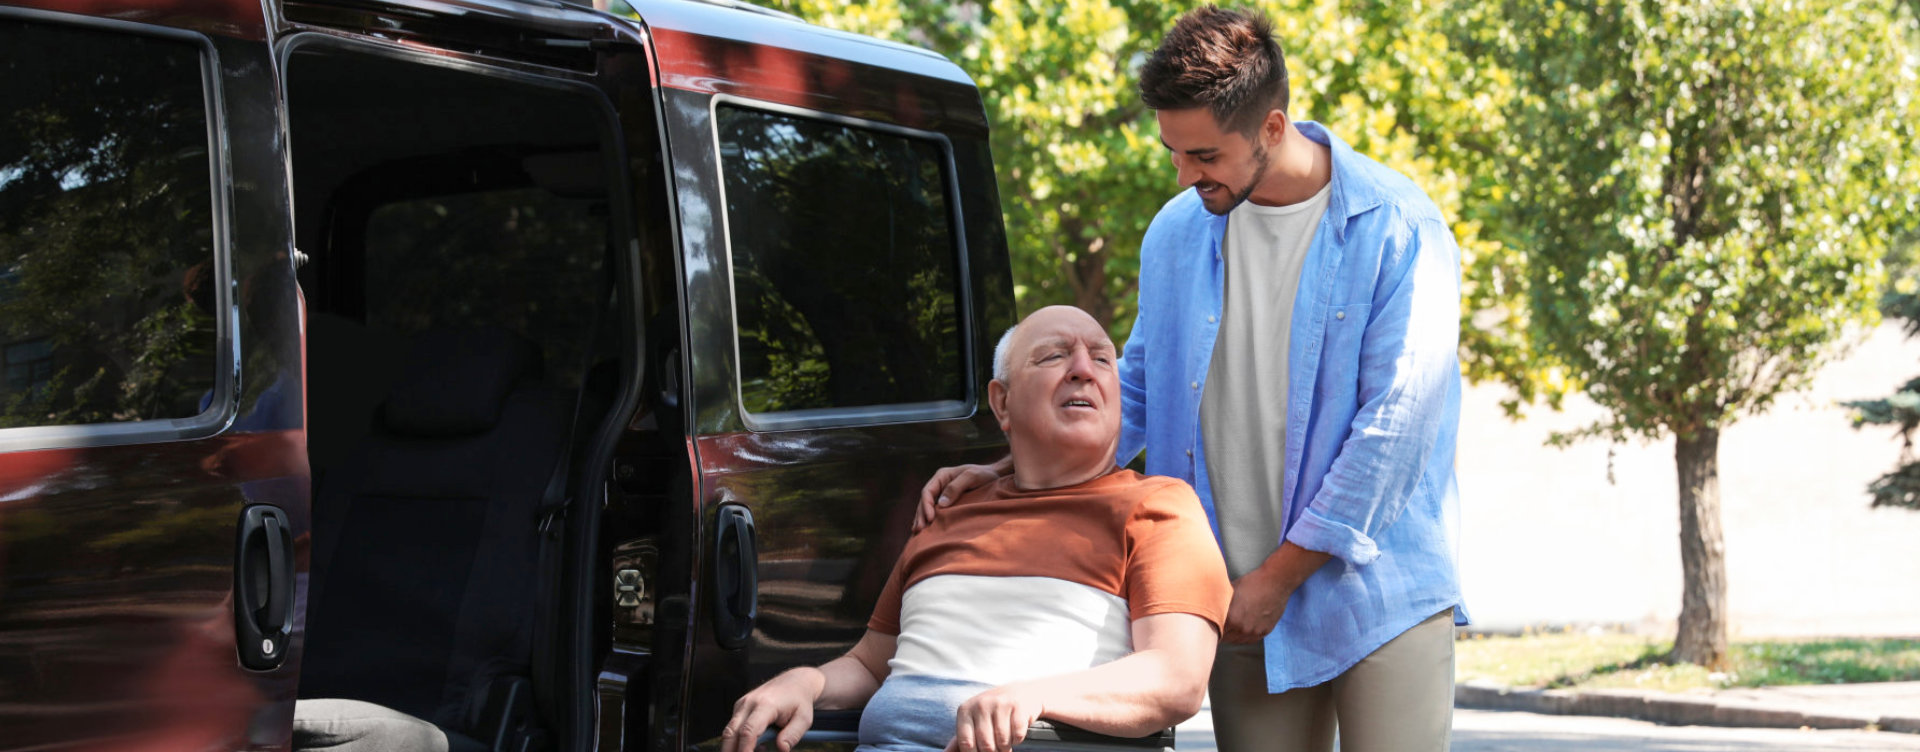 caregiver helping senior with wheelchair